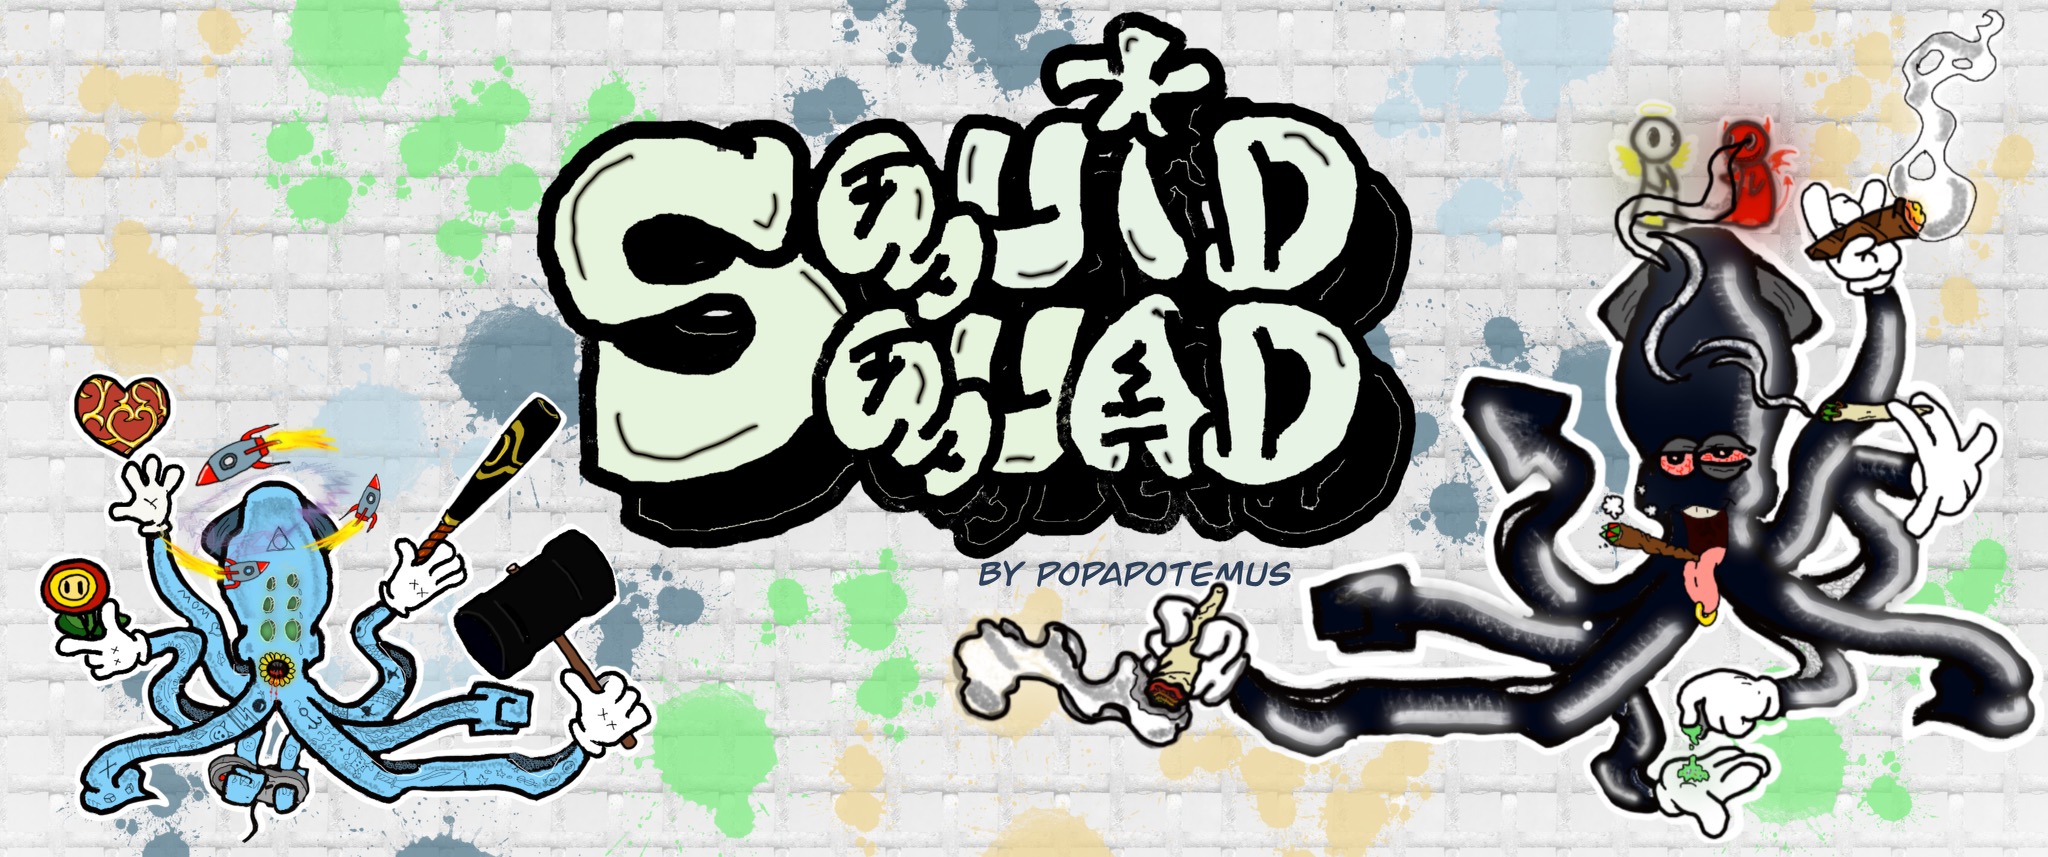 Squid_Squad_Deployer 橫幅